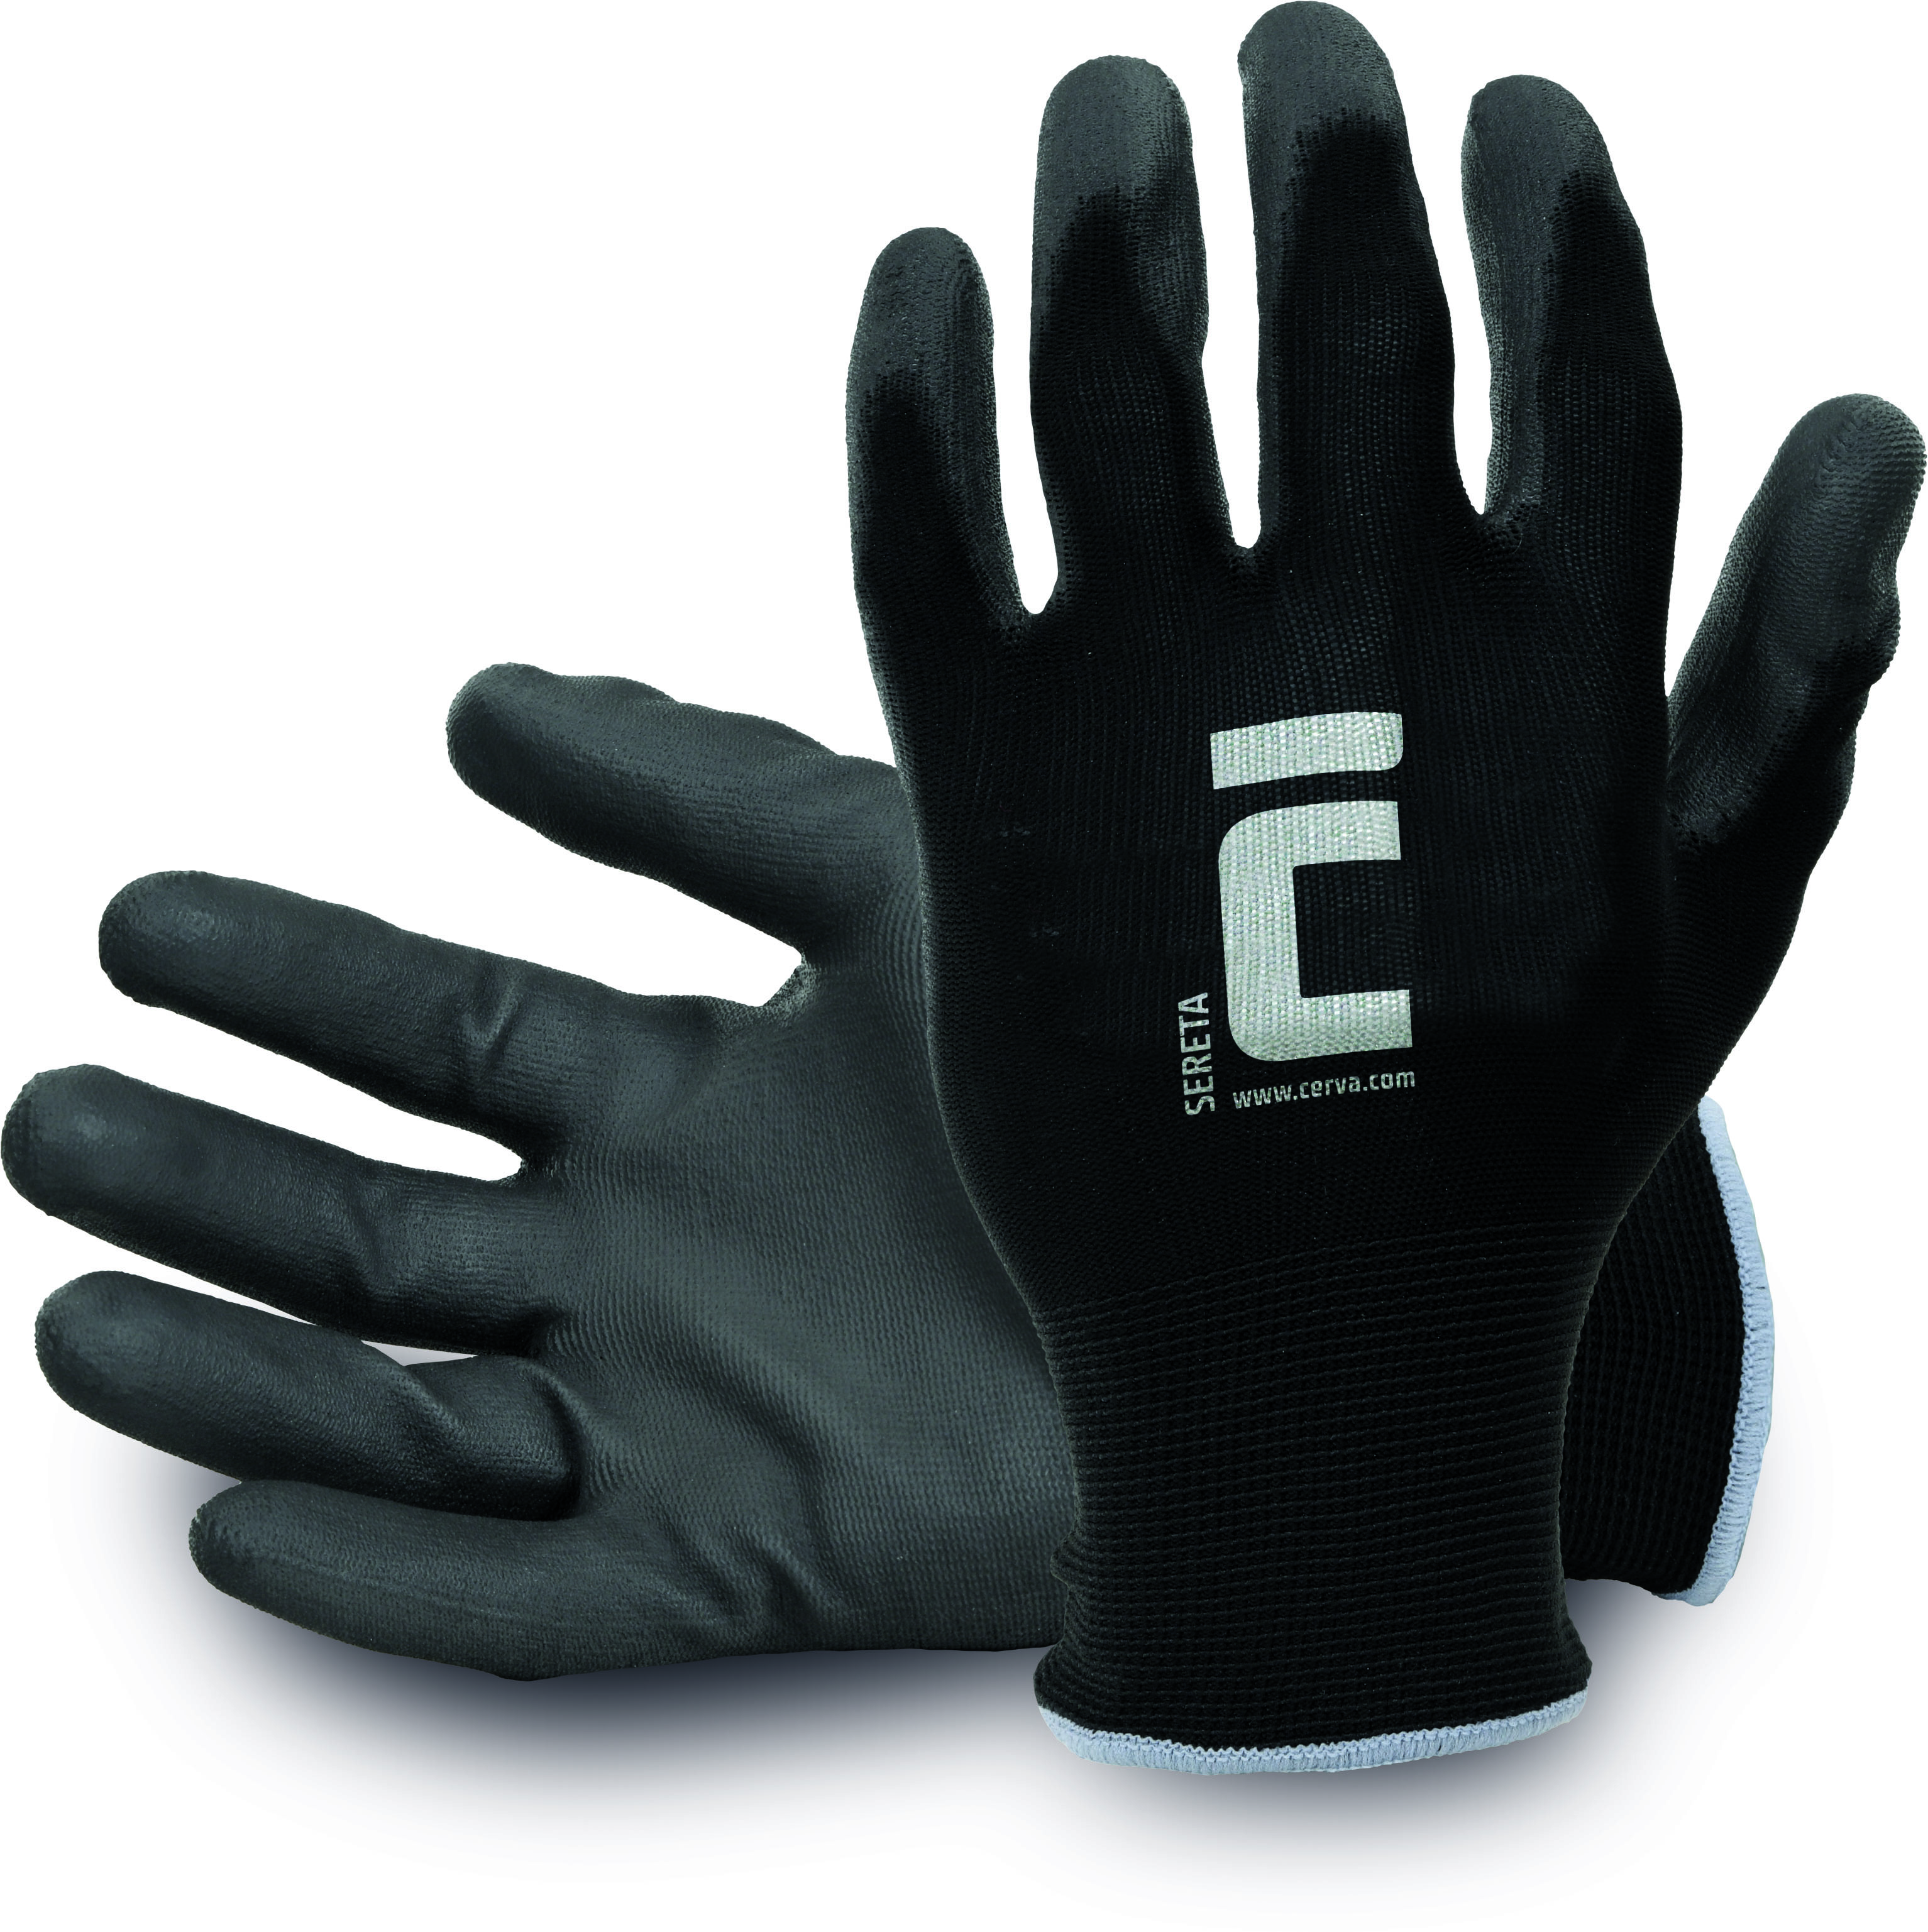 SERETA gloves